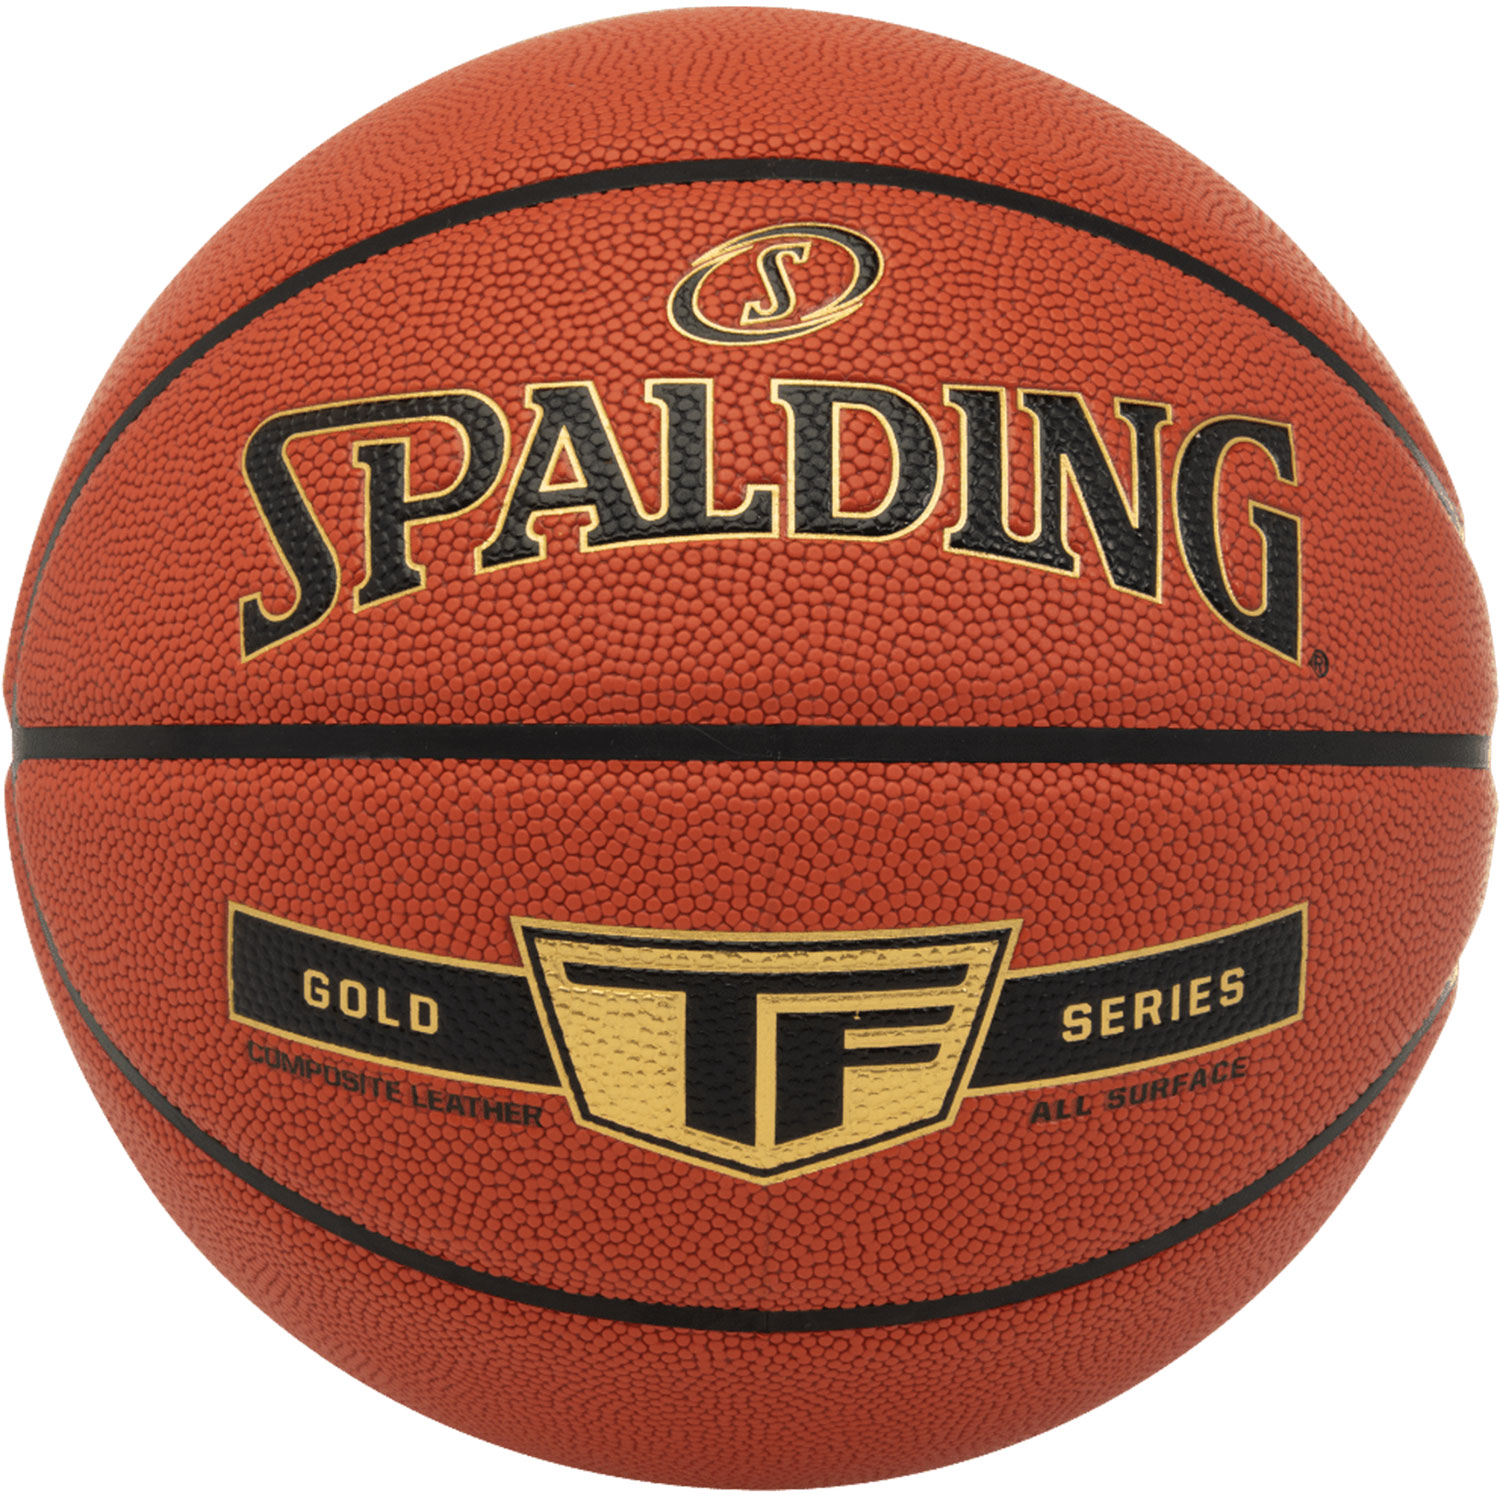 Spalding TF Gold basketball size 7